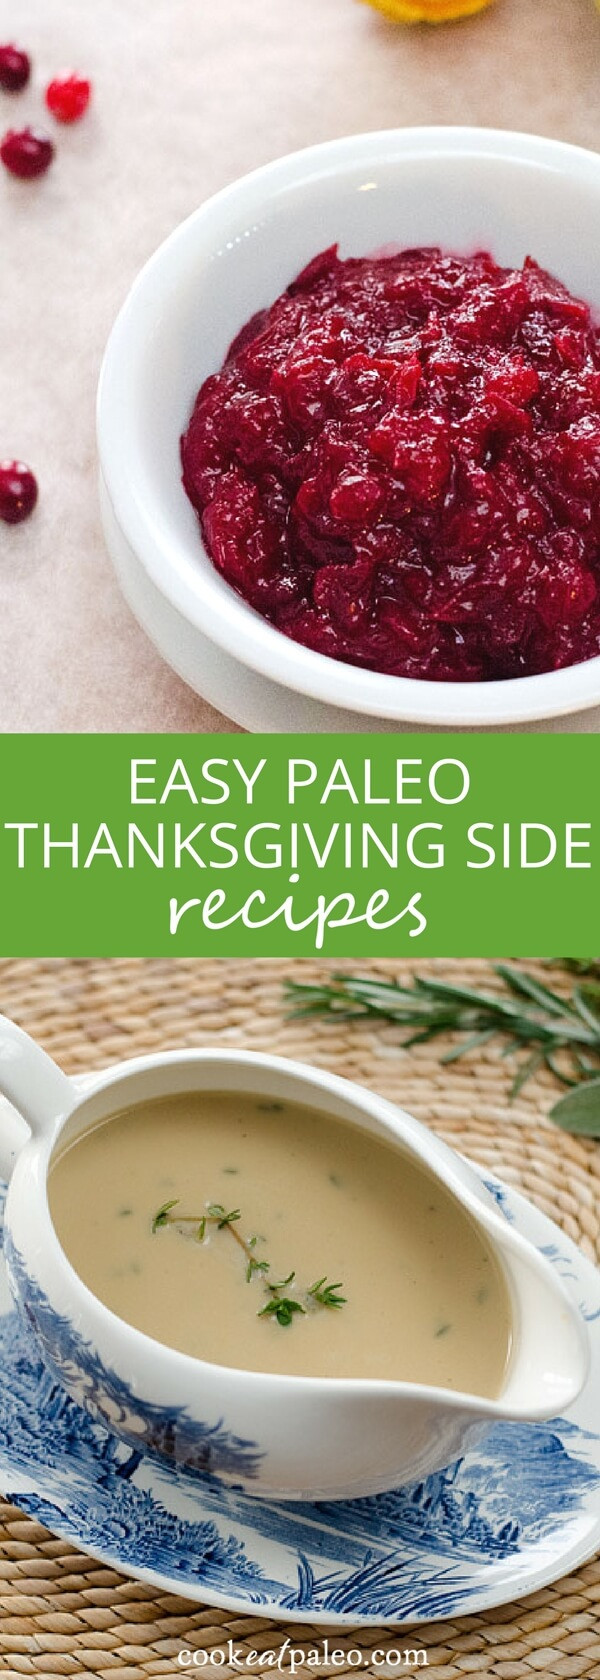 Gluten Free Thanksgiving Sides
 15 Easy Paleo Thanksgiving Sides